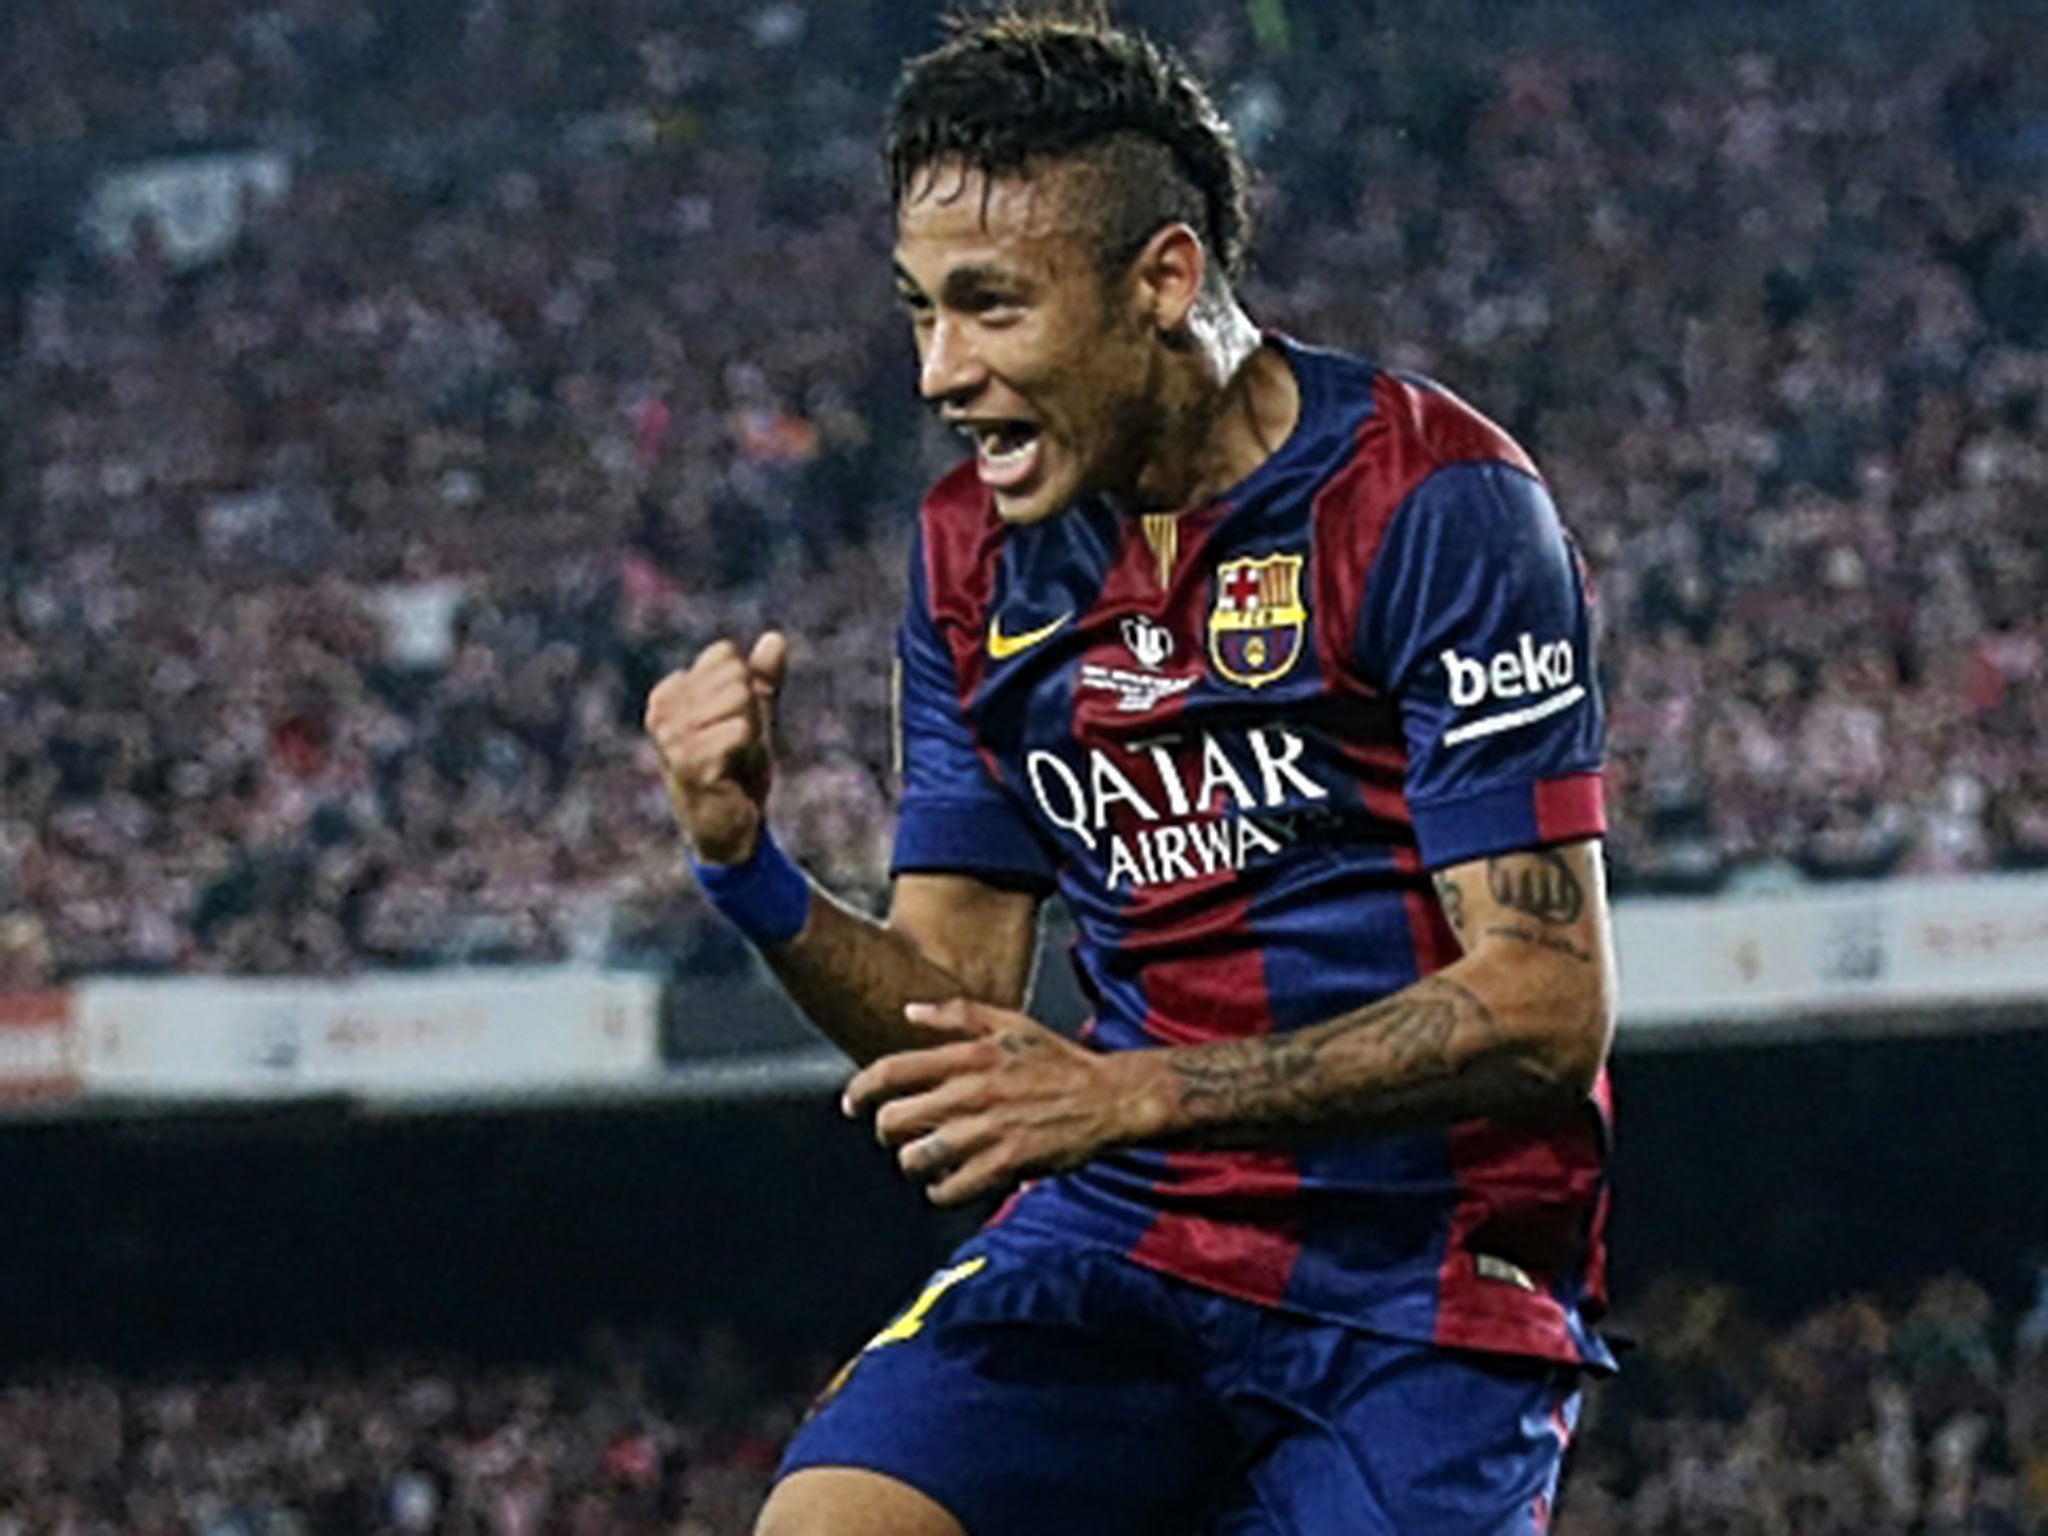 Neymar has scored 53 goals in 91 games since joining Barcelona in 2013